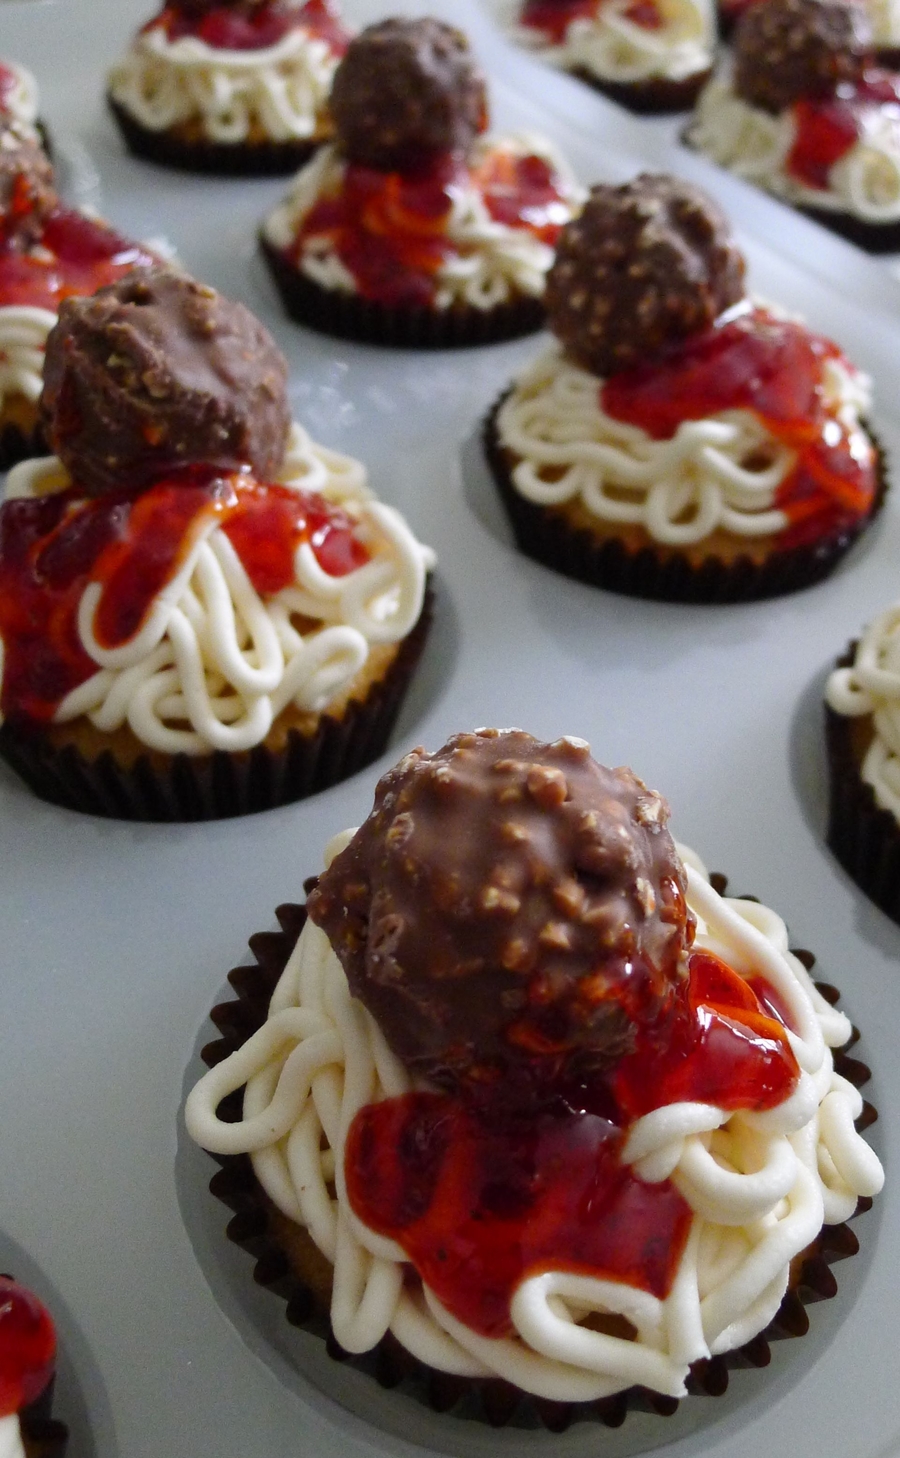 Spaghetti and meatballs cupcakes